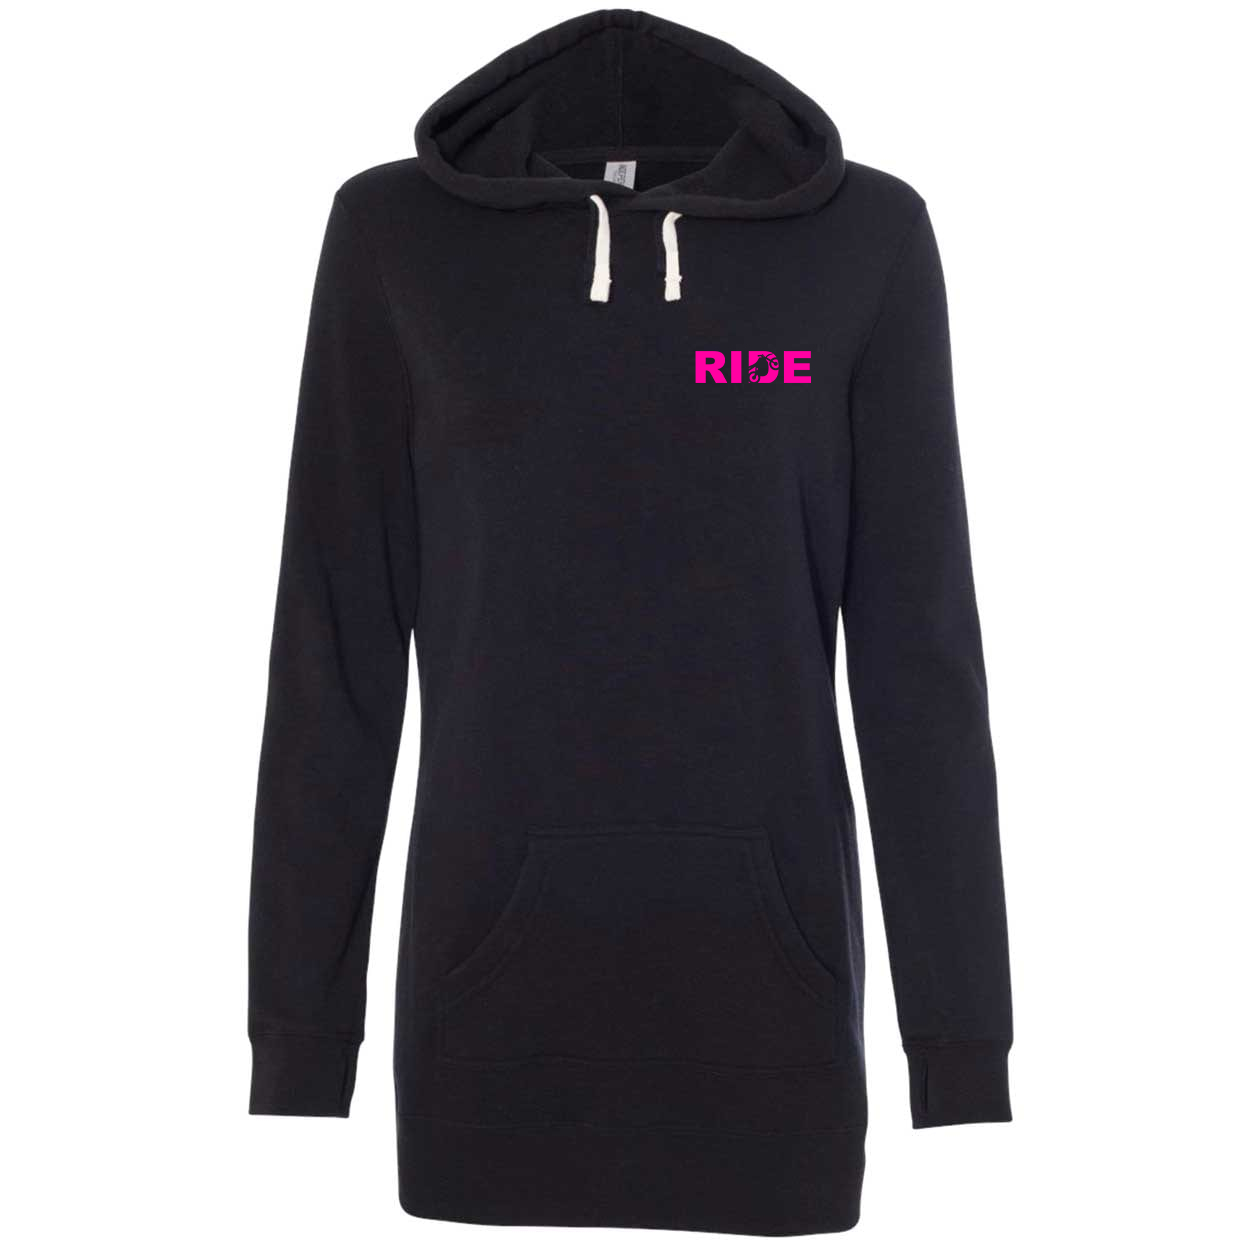 Ride Moto Logo Night Out Womens Pullover Hooded Sweatshirt Dress Black (Pink Logo)